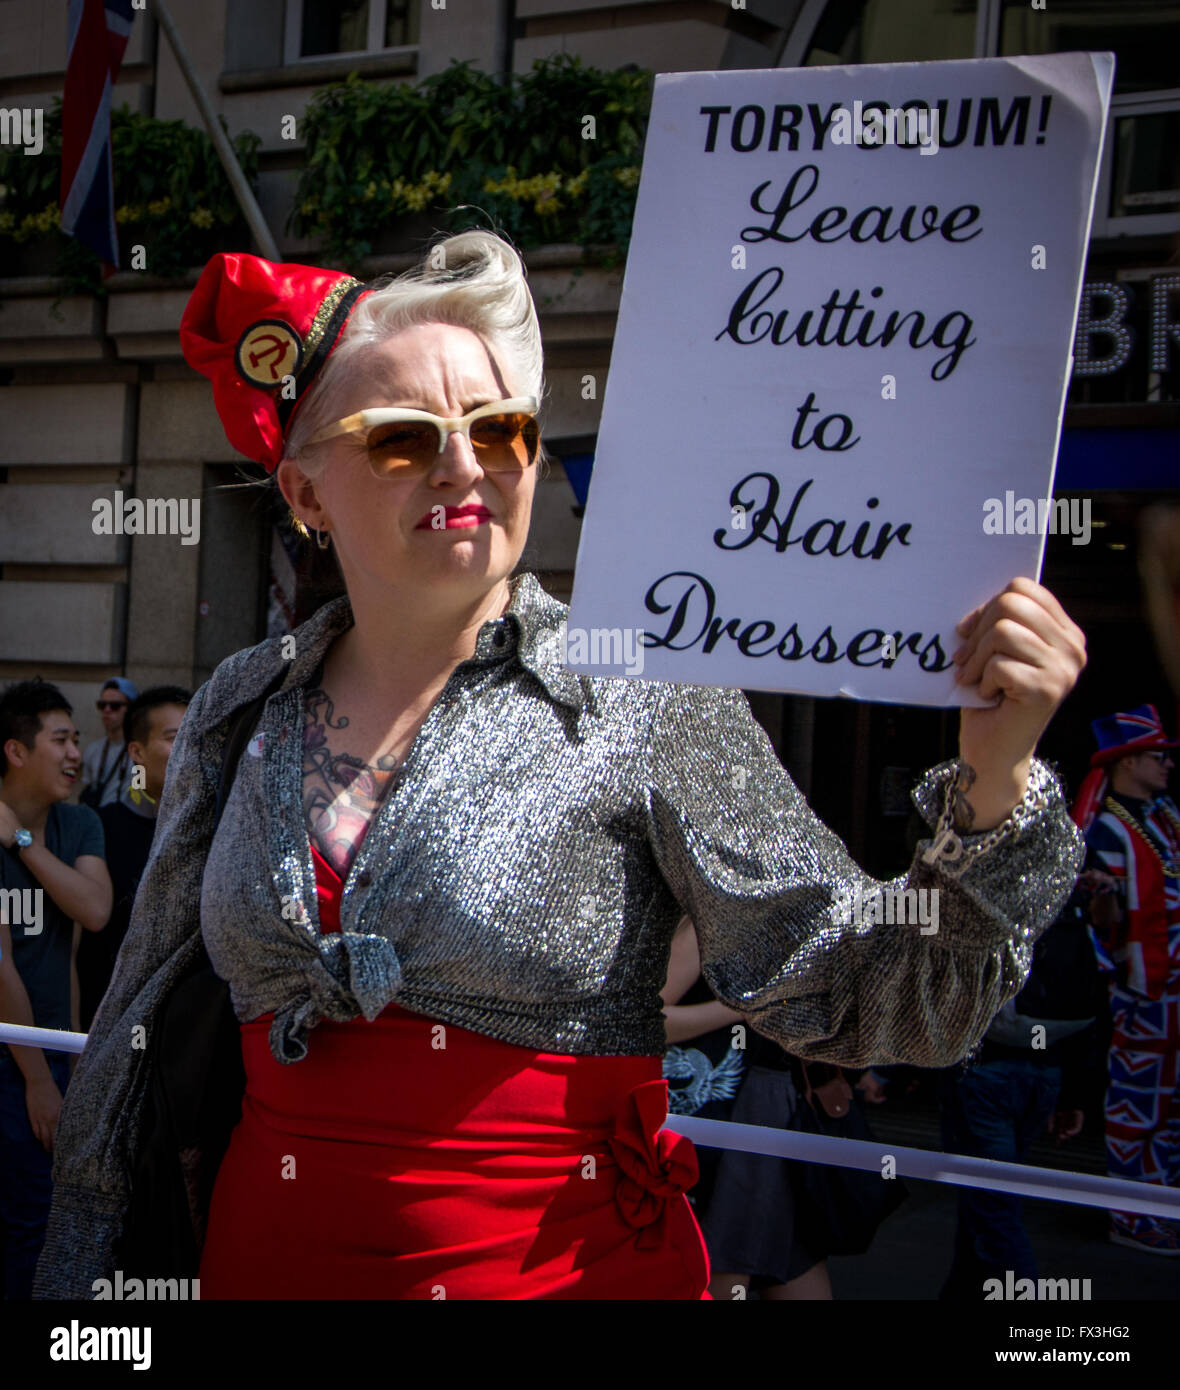 'No More Austerity' protest march, London, June 21, 2014 Stock Photo